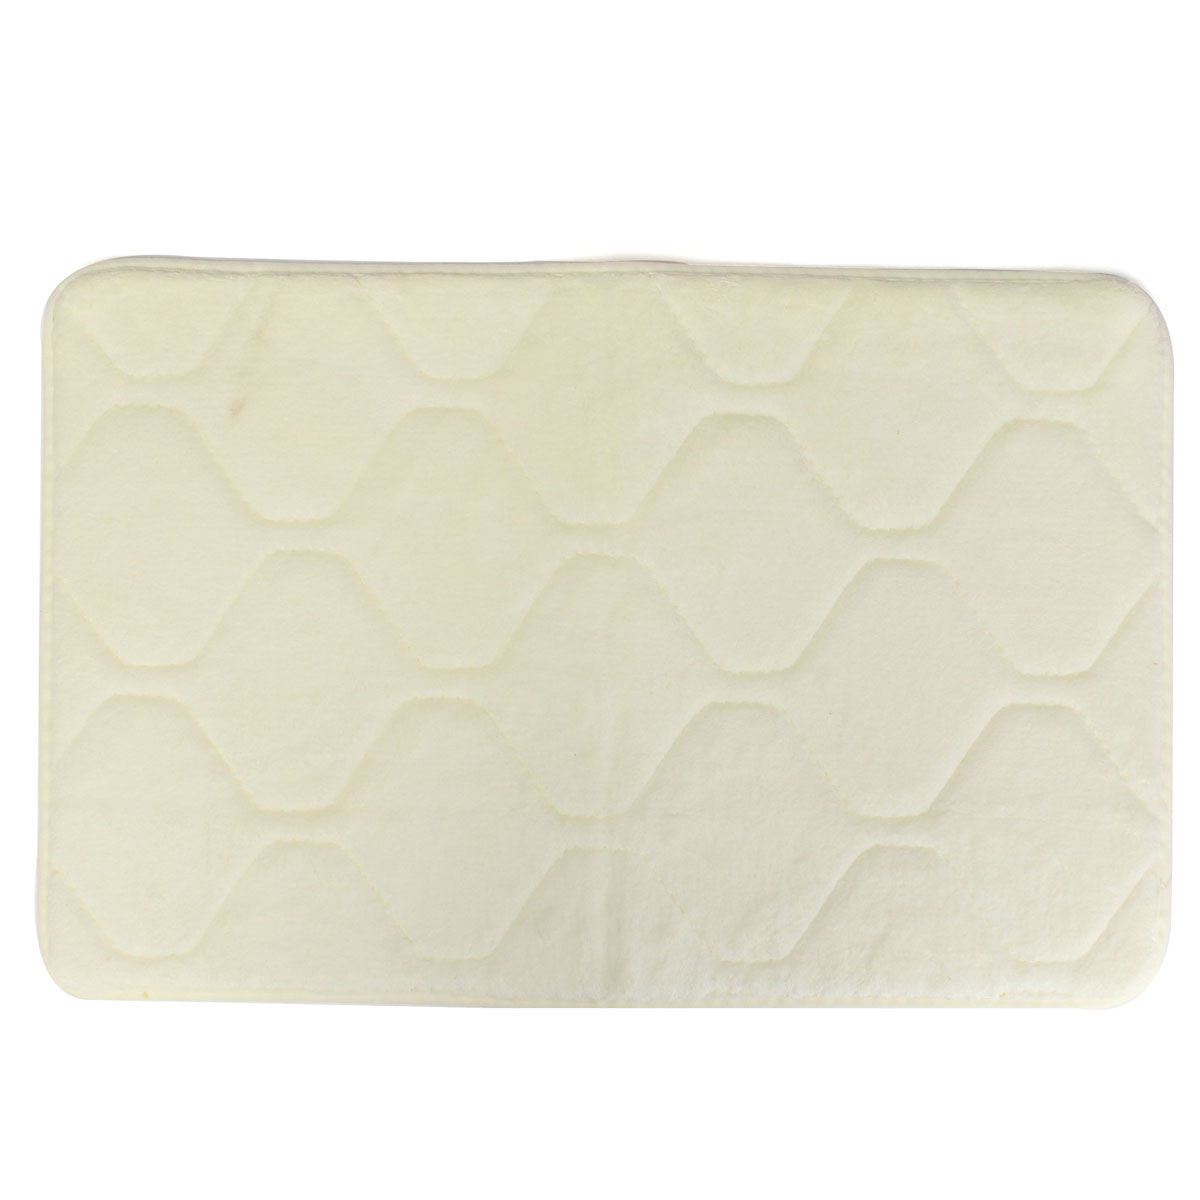 40x60cm Absorbent Soft Memory Foam Mat Bath Rug Antislip Carpet